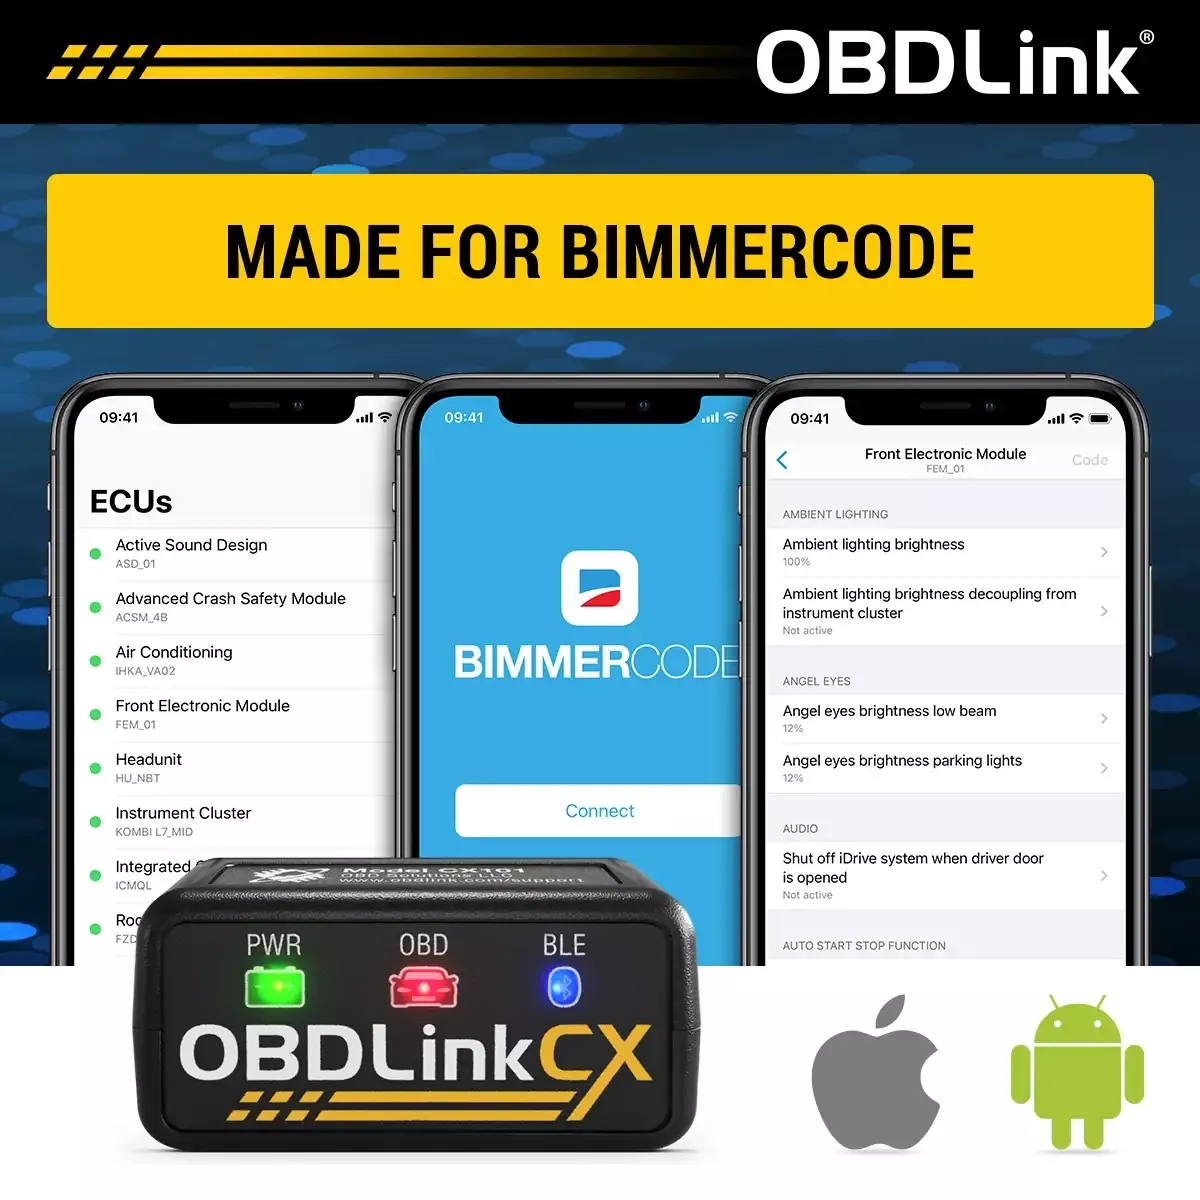 OBDLink (@OBDlink) / X